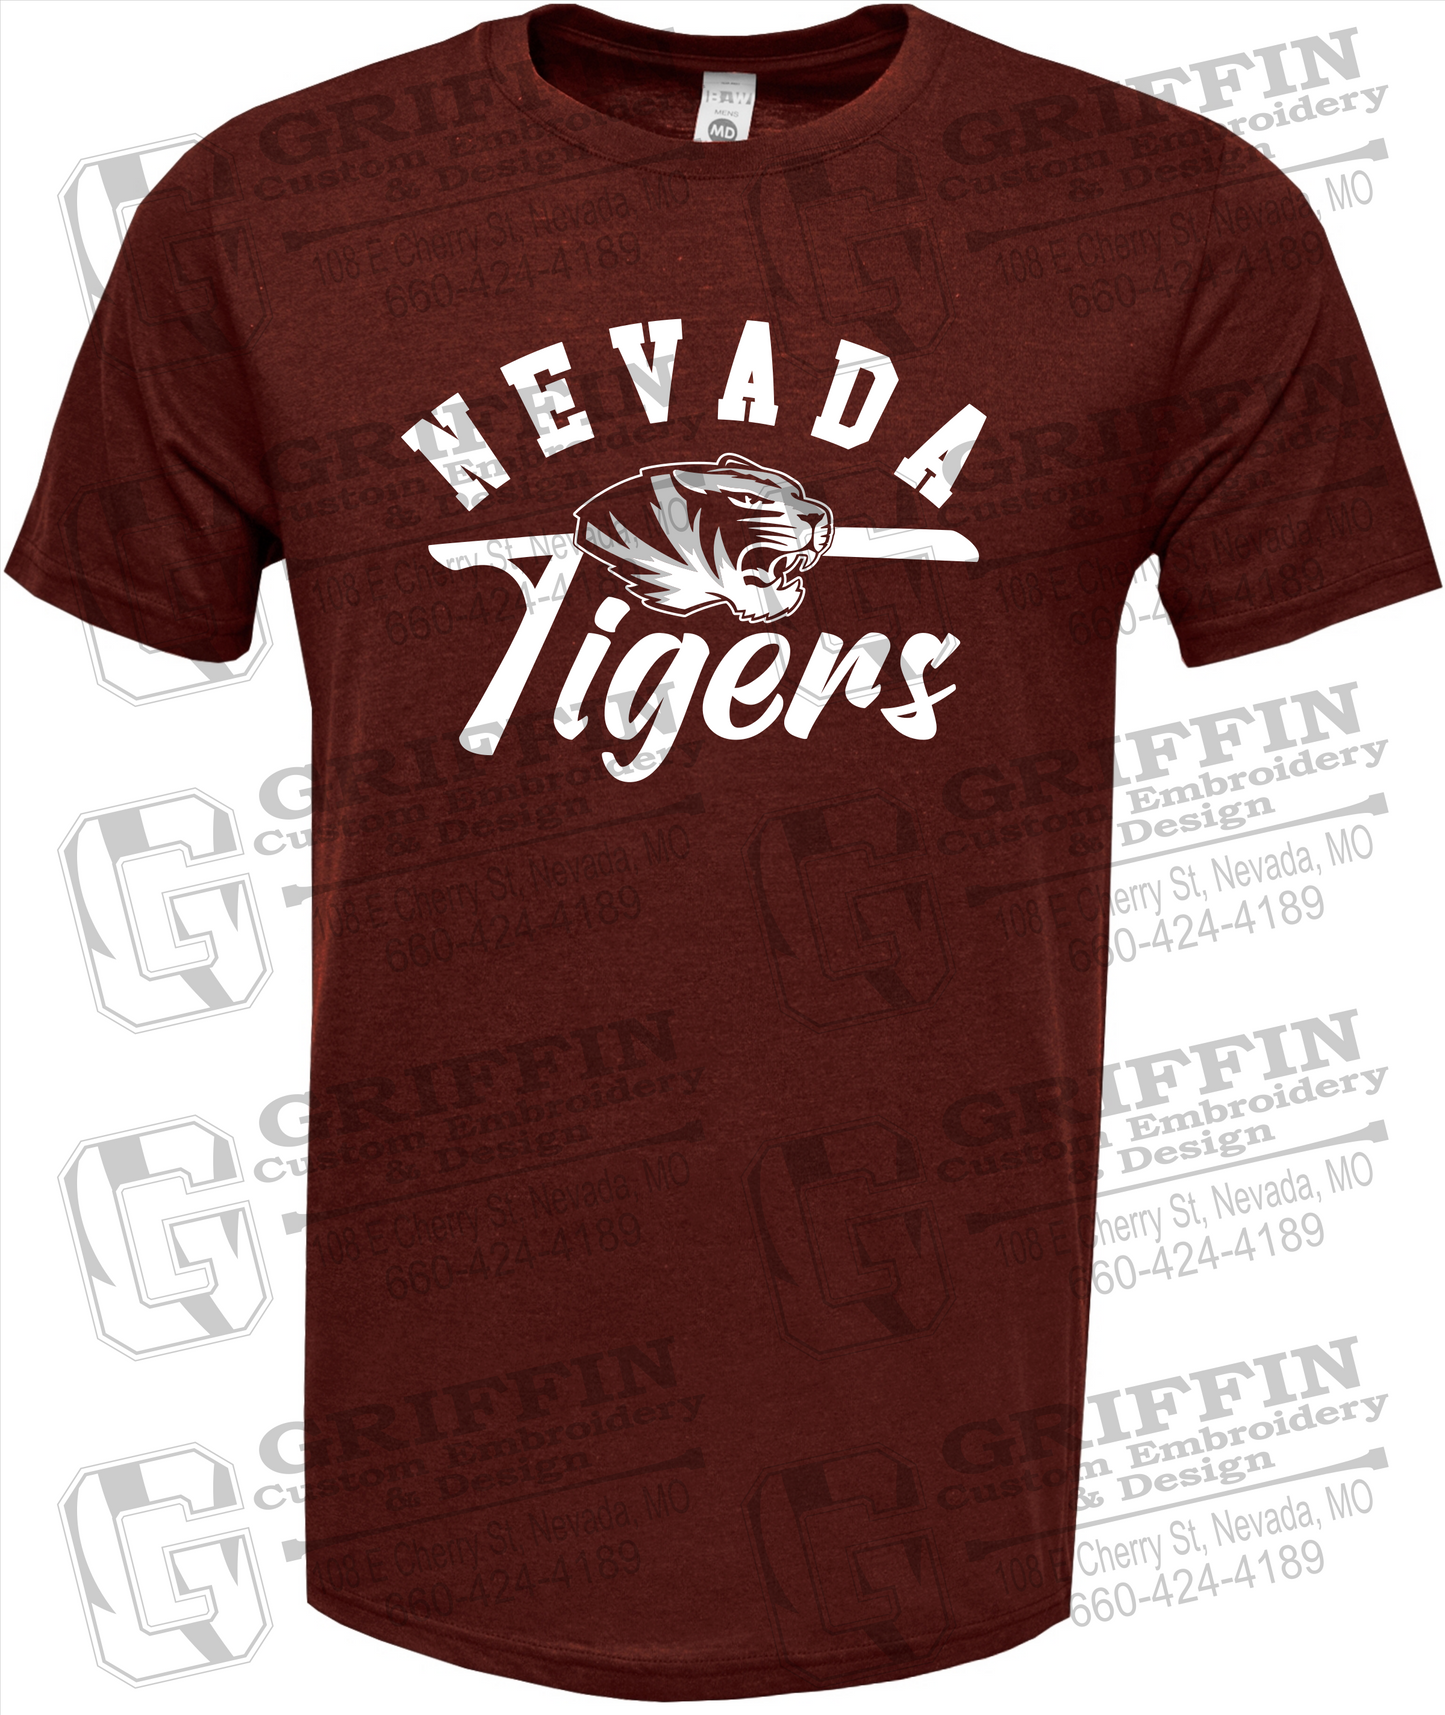 Nevada Tigers 20-Z Short Sleeve T-Shirt